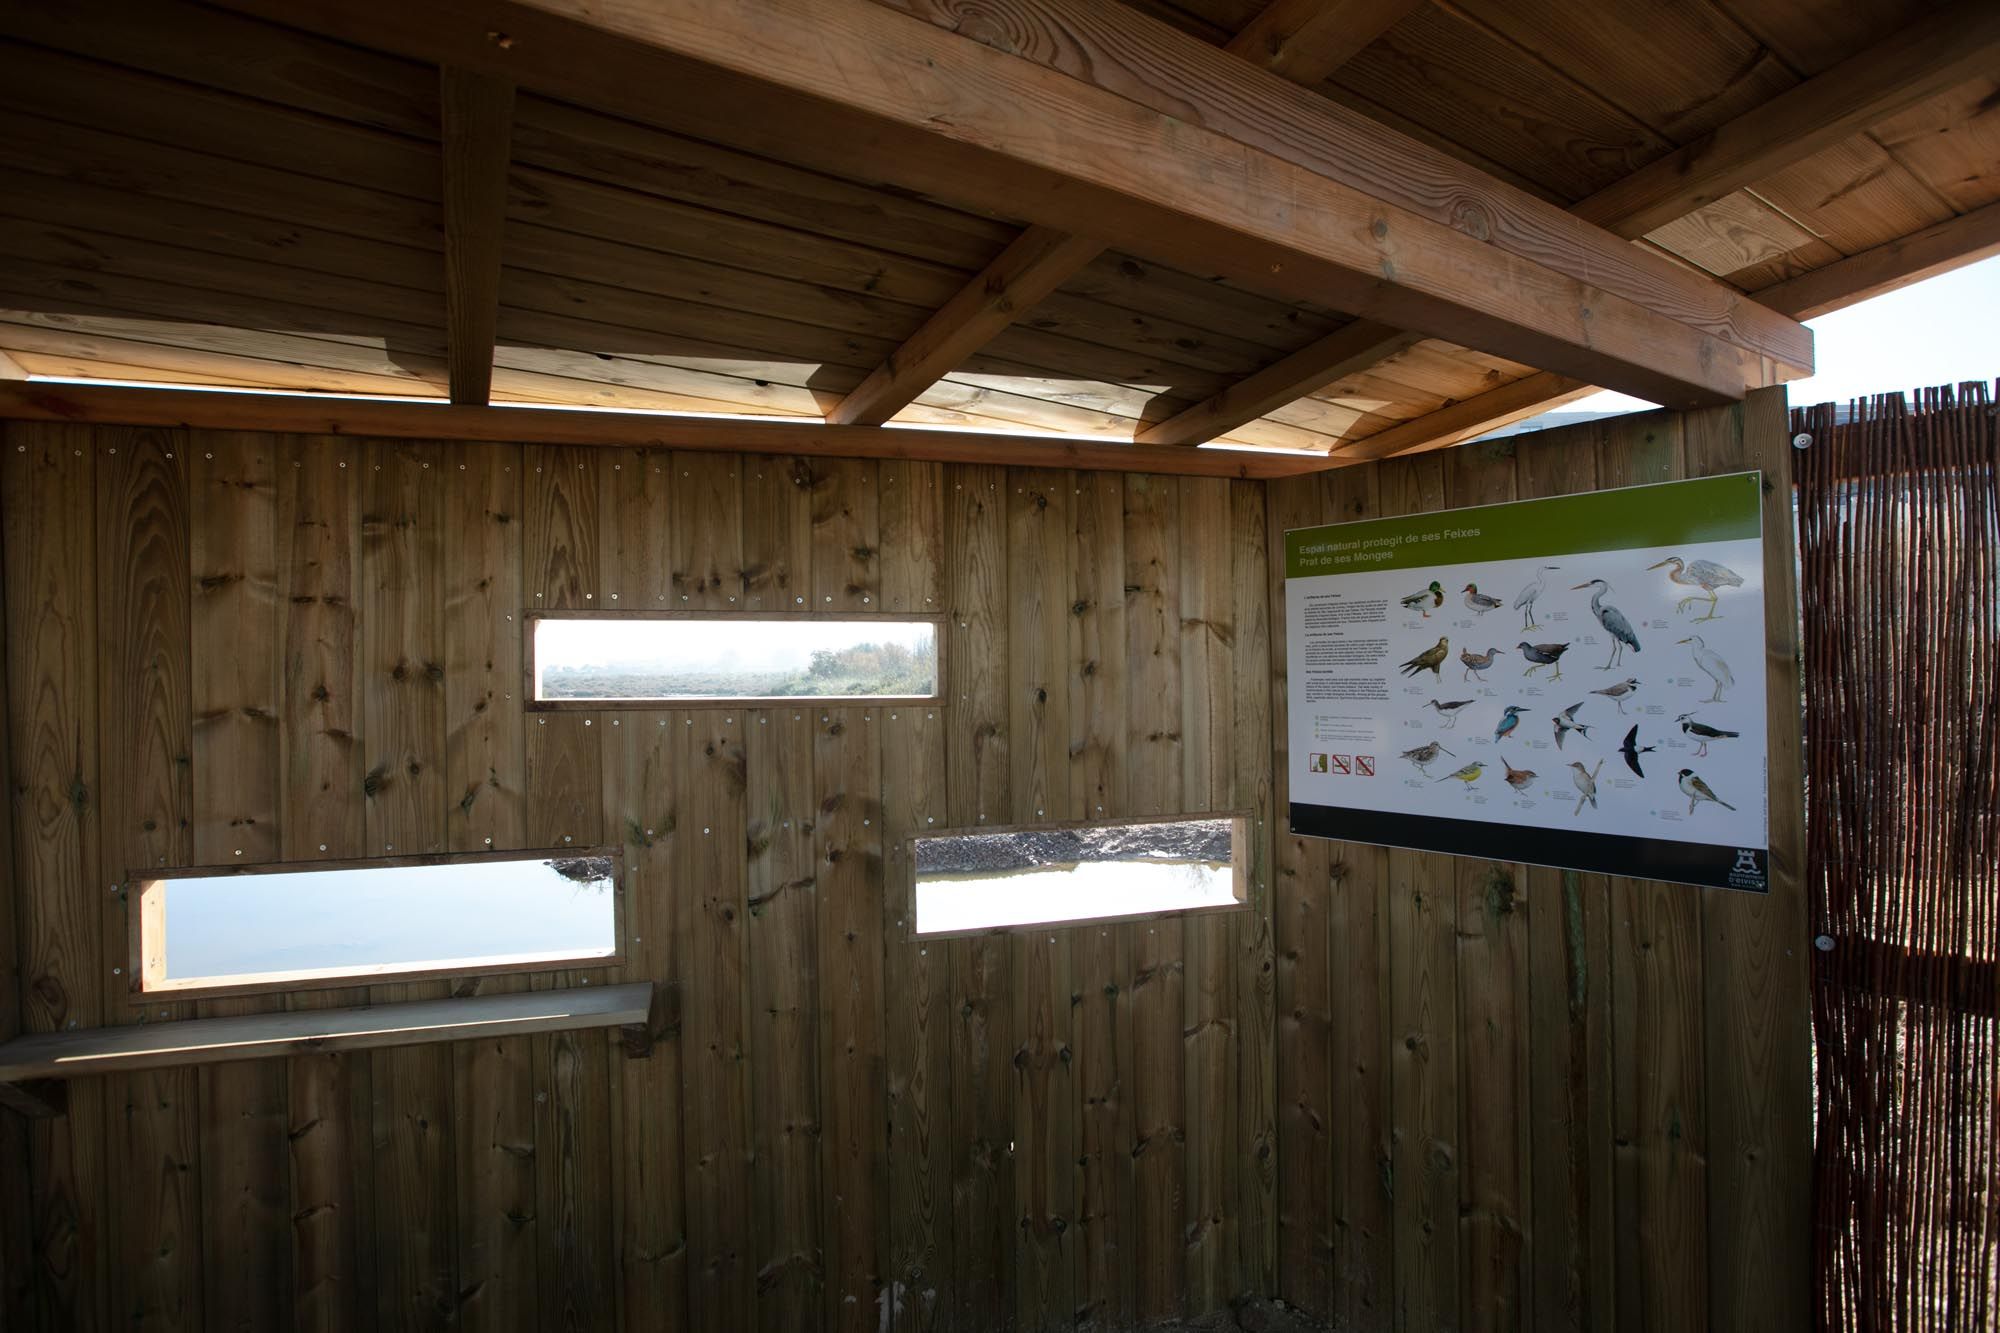 Instalado el primer observador de aves del municipio de Ibiza